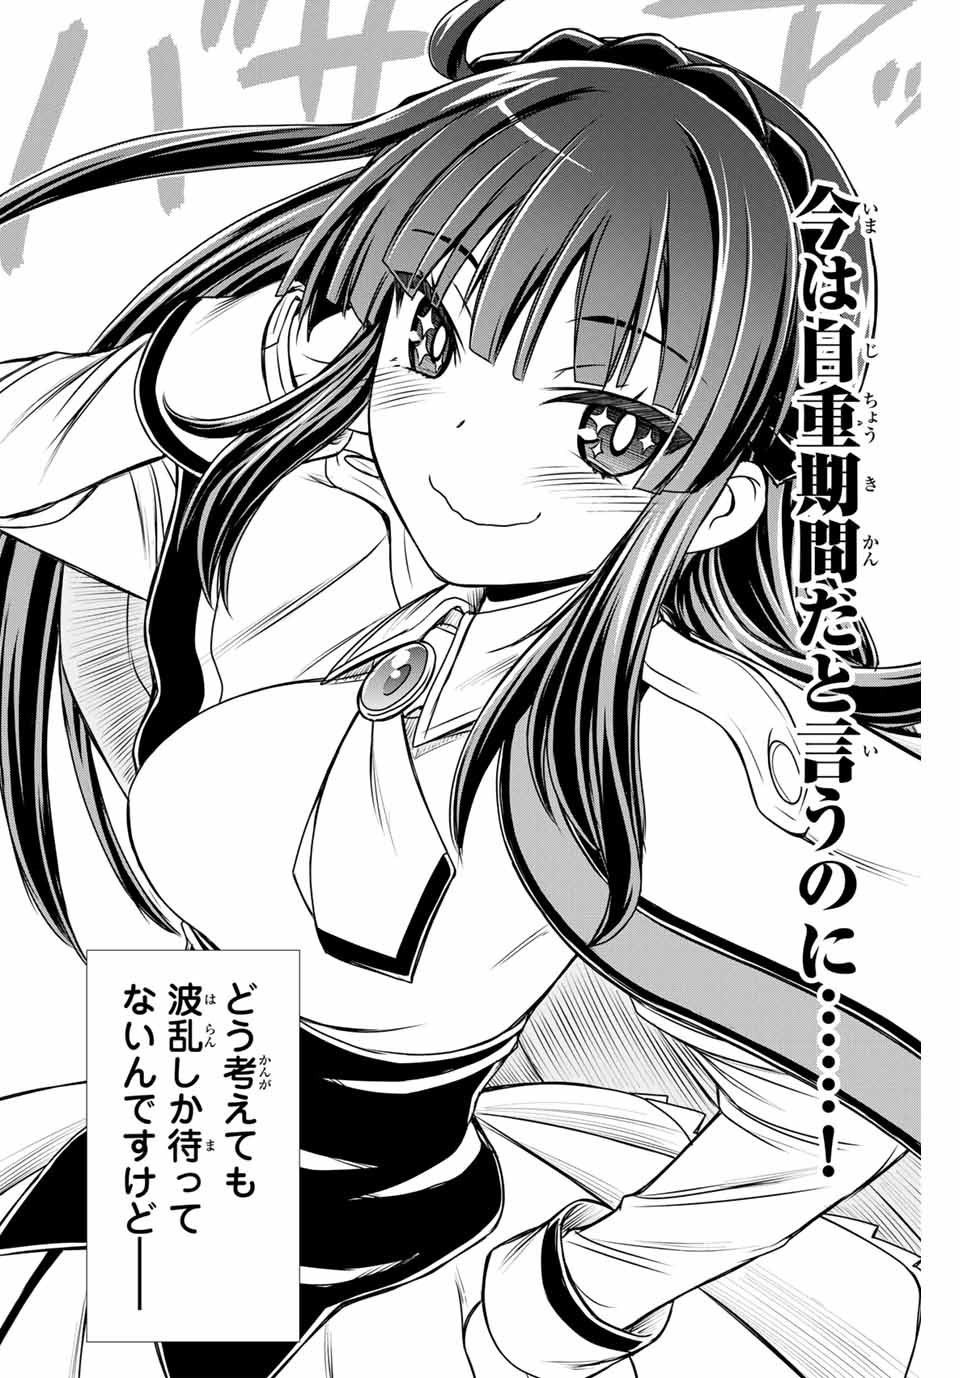 Nengan no Akuyaku Reijou (Last Boss) no Karada wo Teniiretazo!  - Chapter 23.5 - Page 10